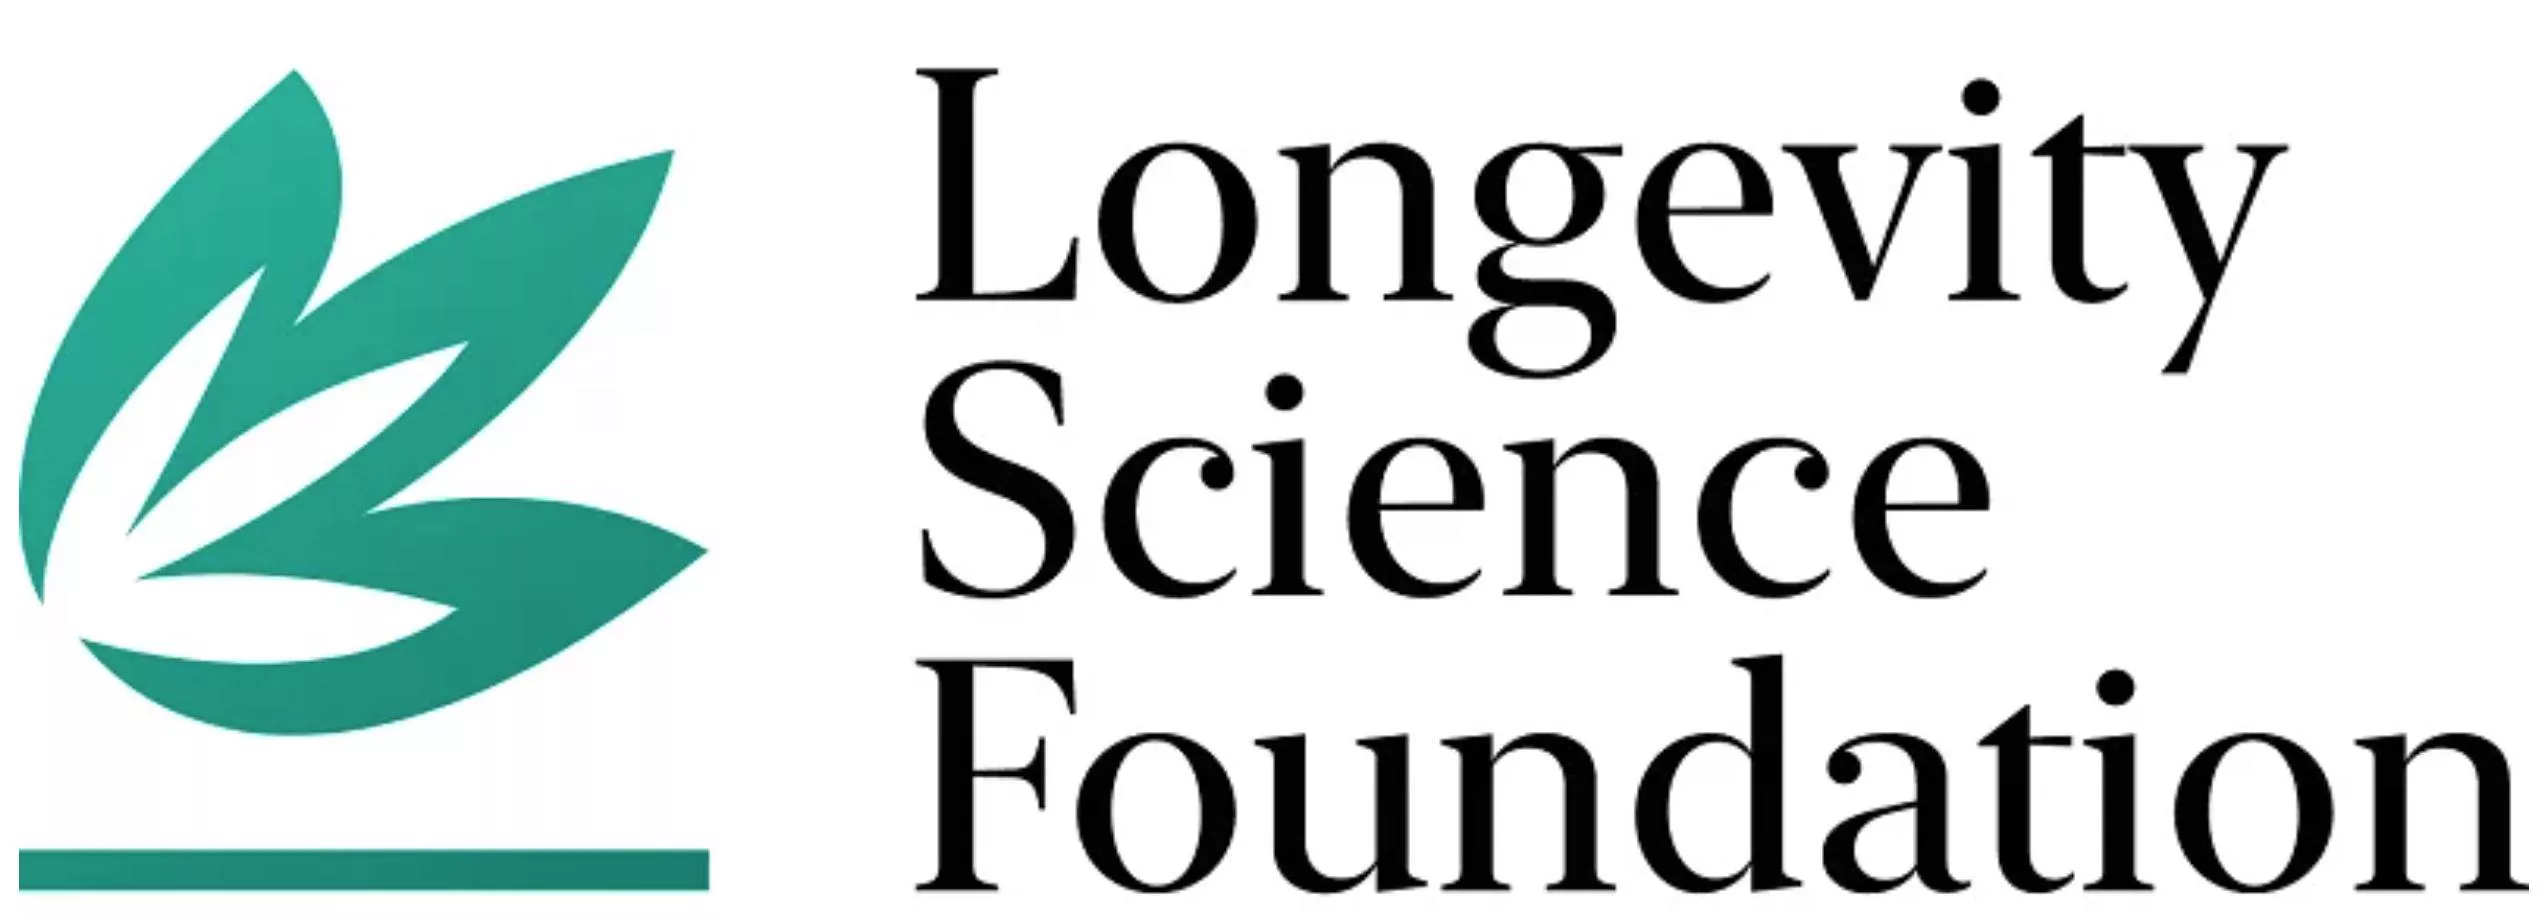 Longevity-Science-Foundation